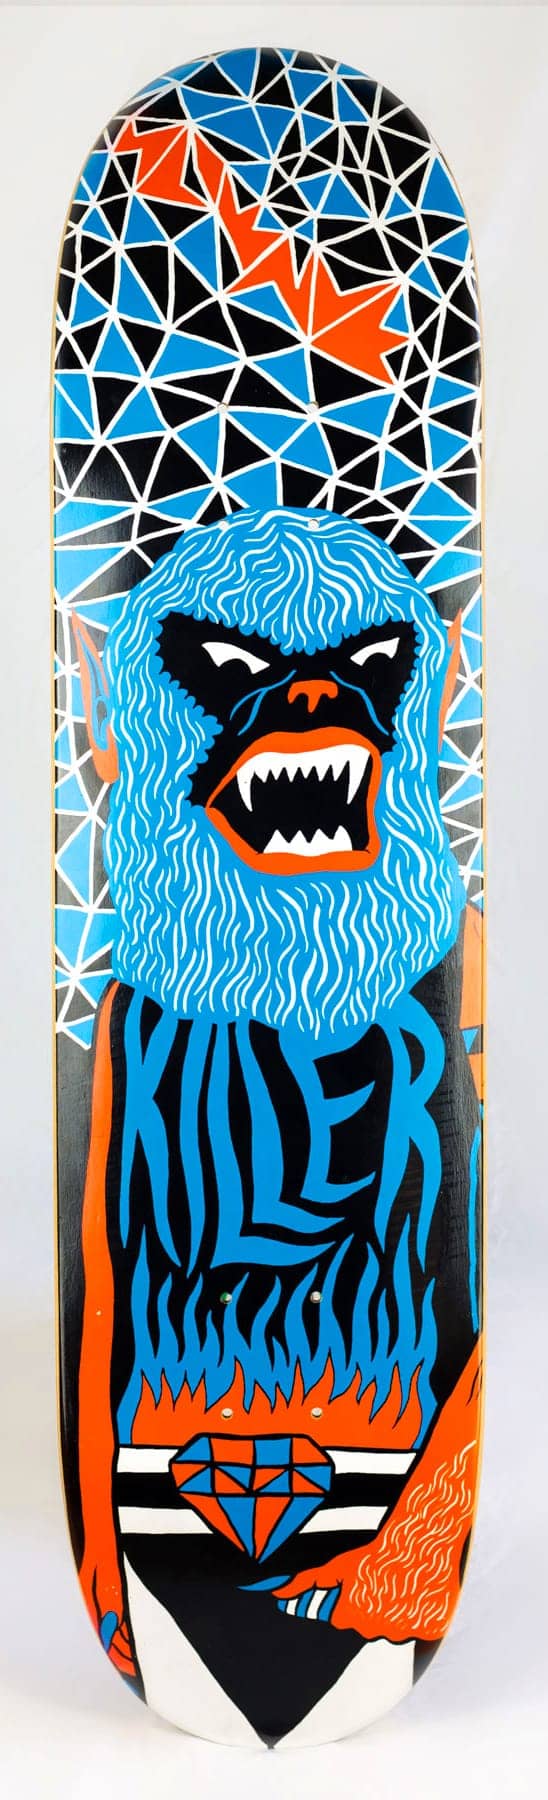 stevie gee illustrator killer werewolf skateboard graphic collaboration